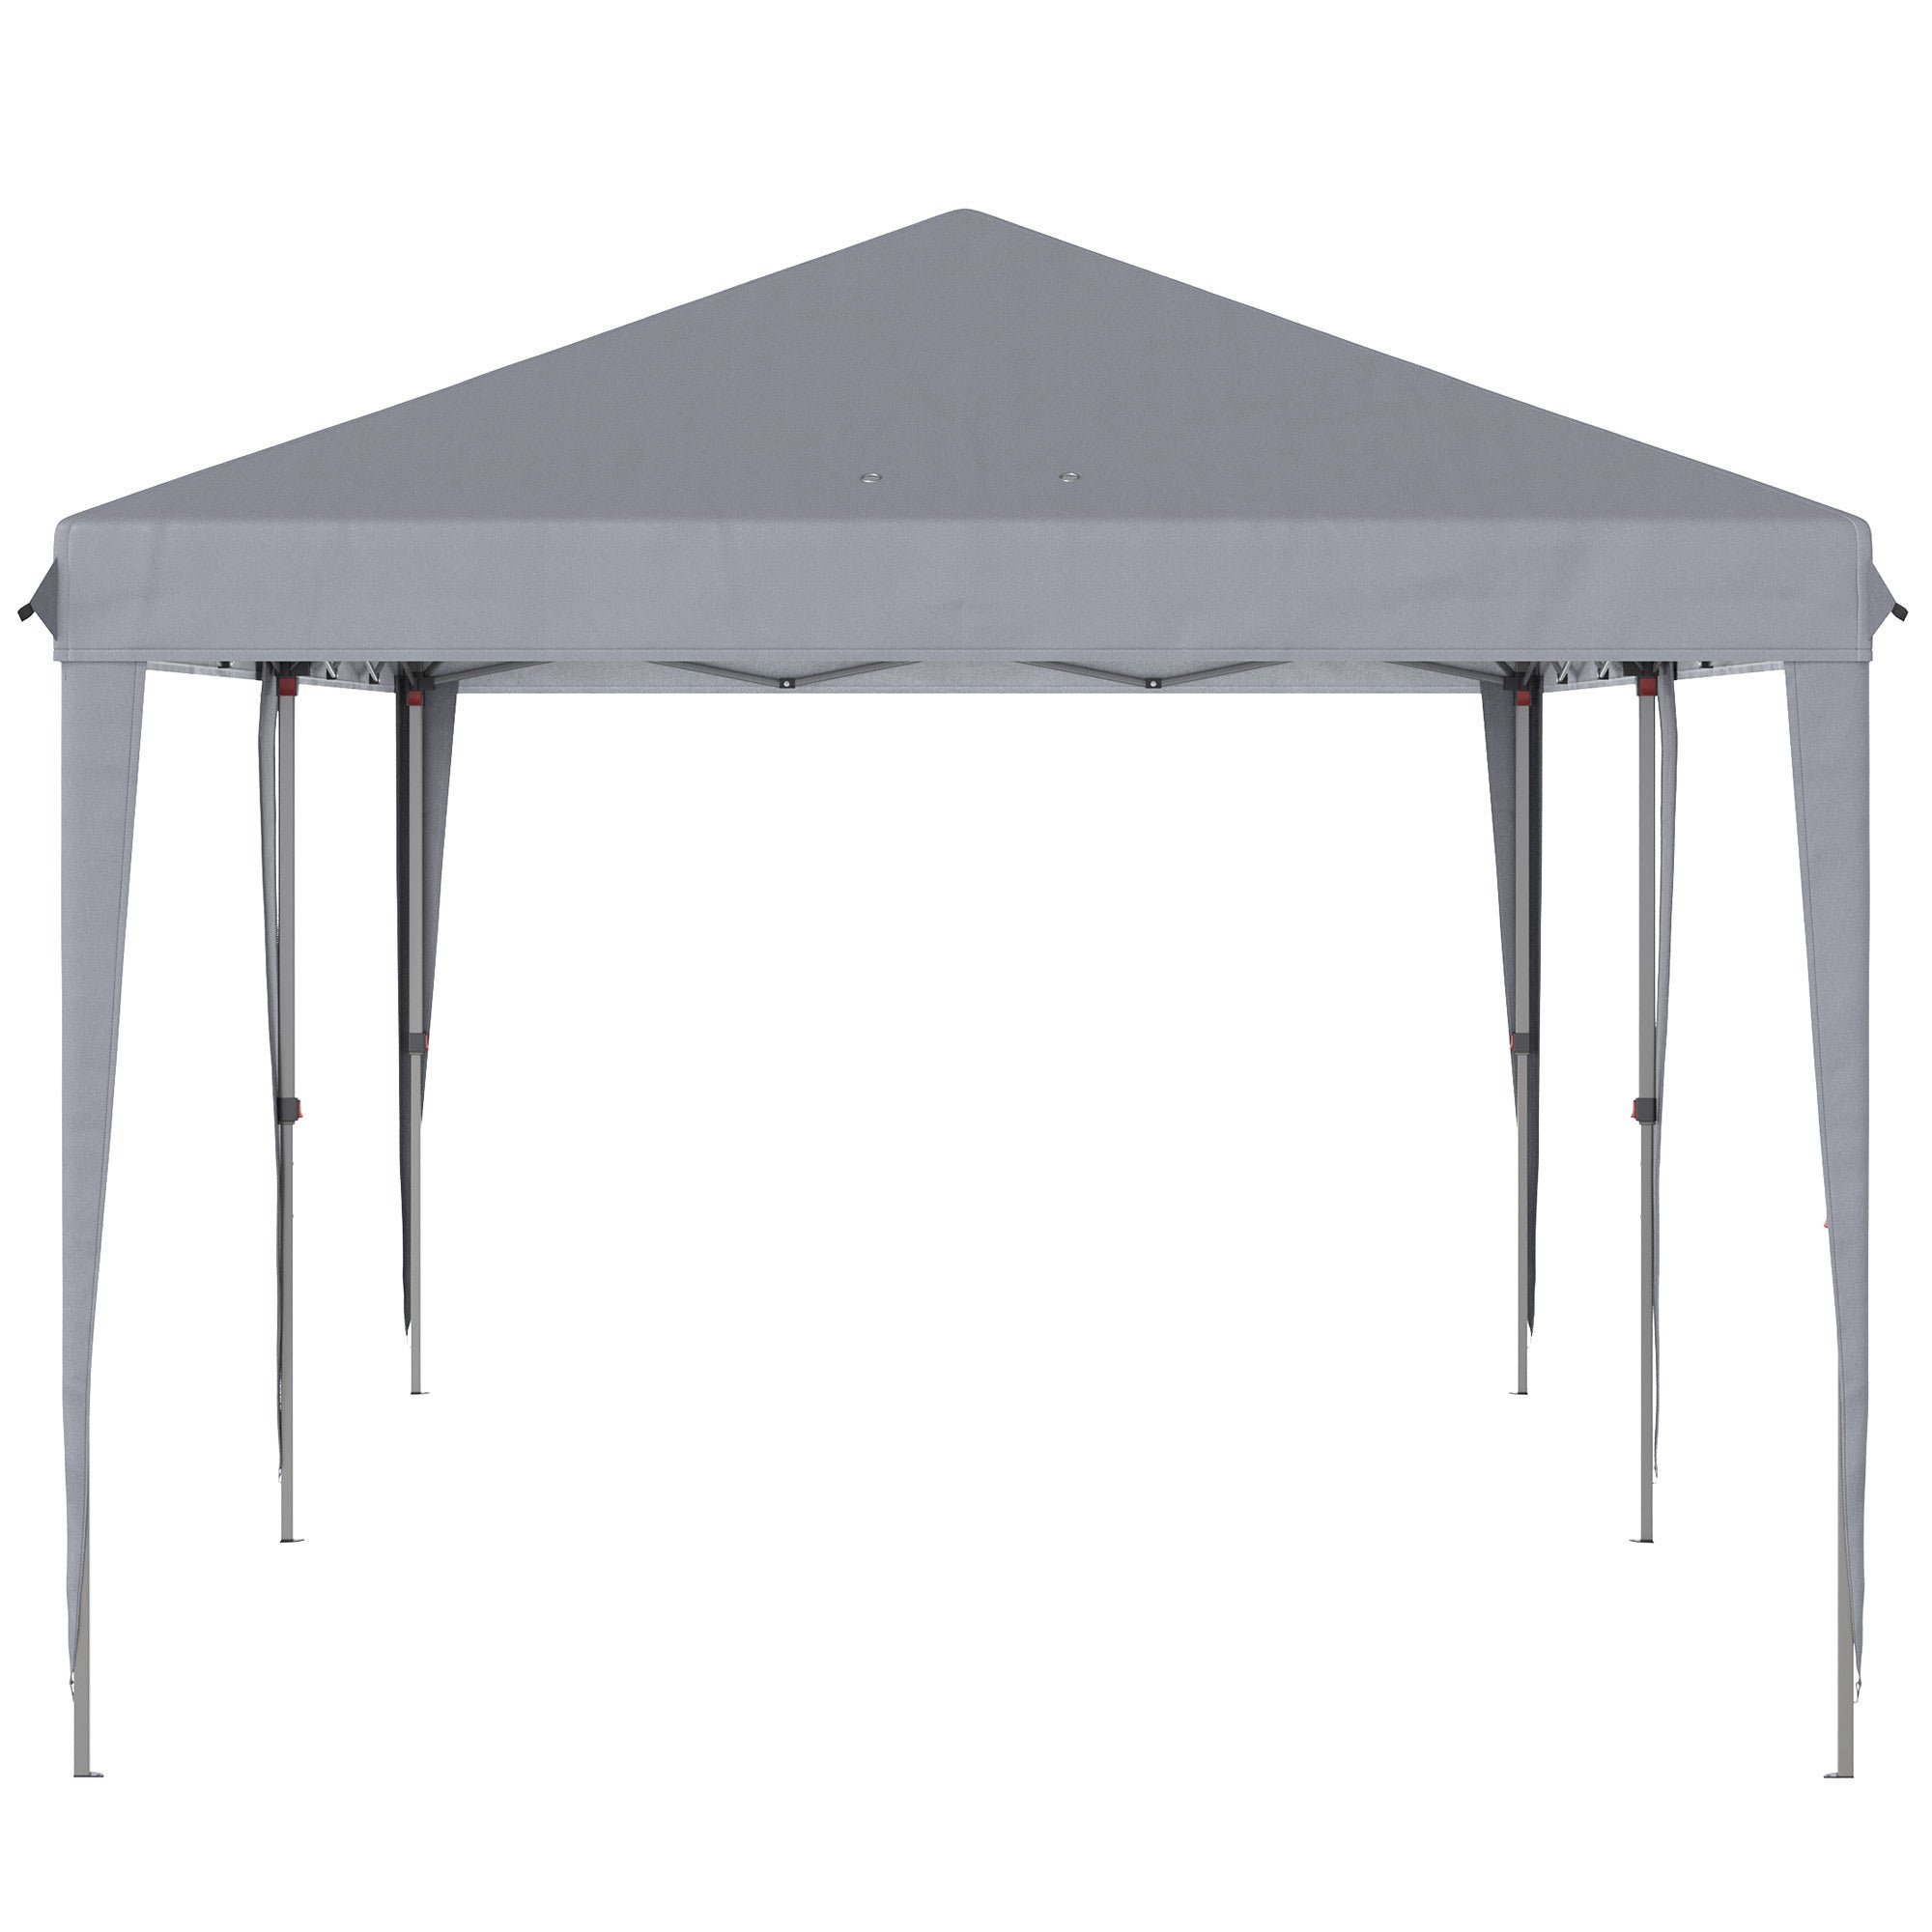 Outsunny 10' x 20' Pop Up Canopy Tent, Heavy Duty gray-steel